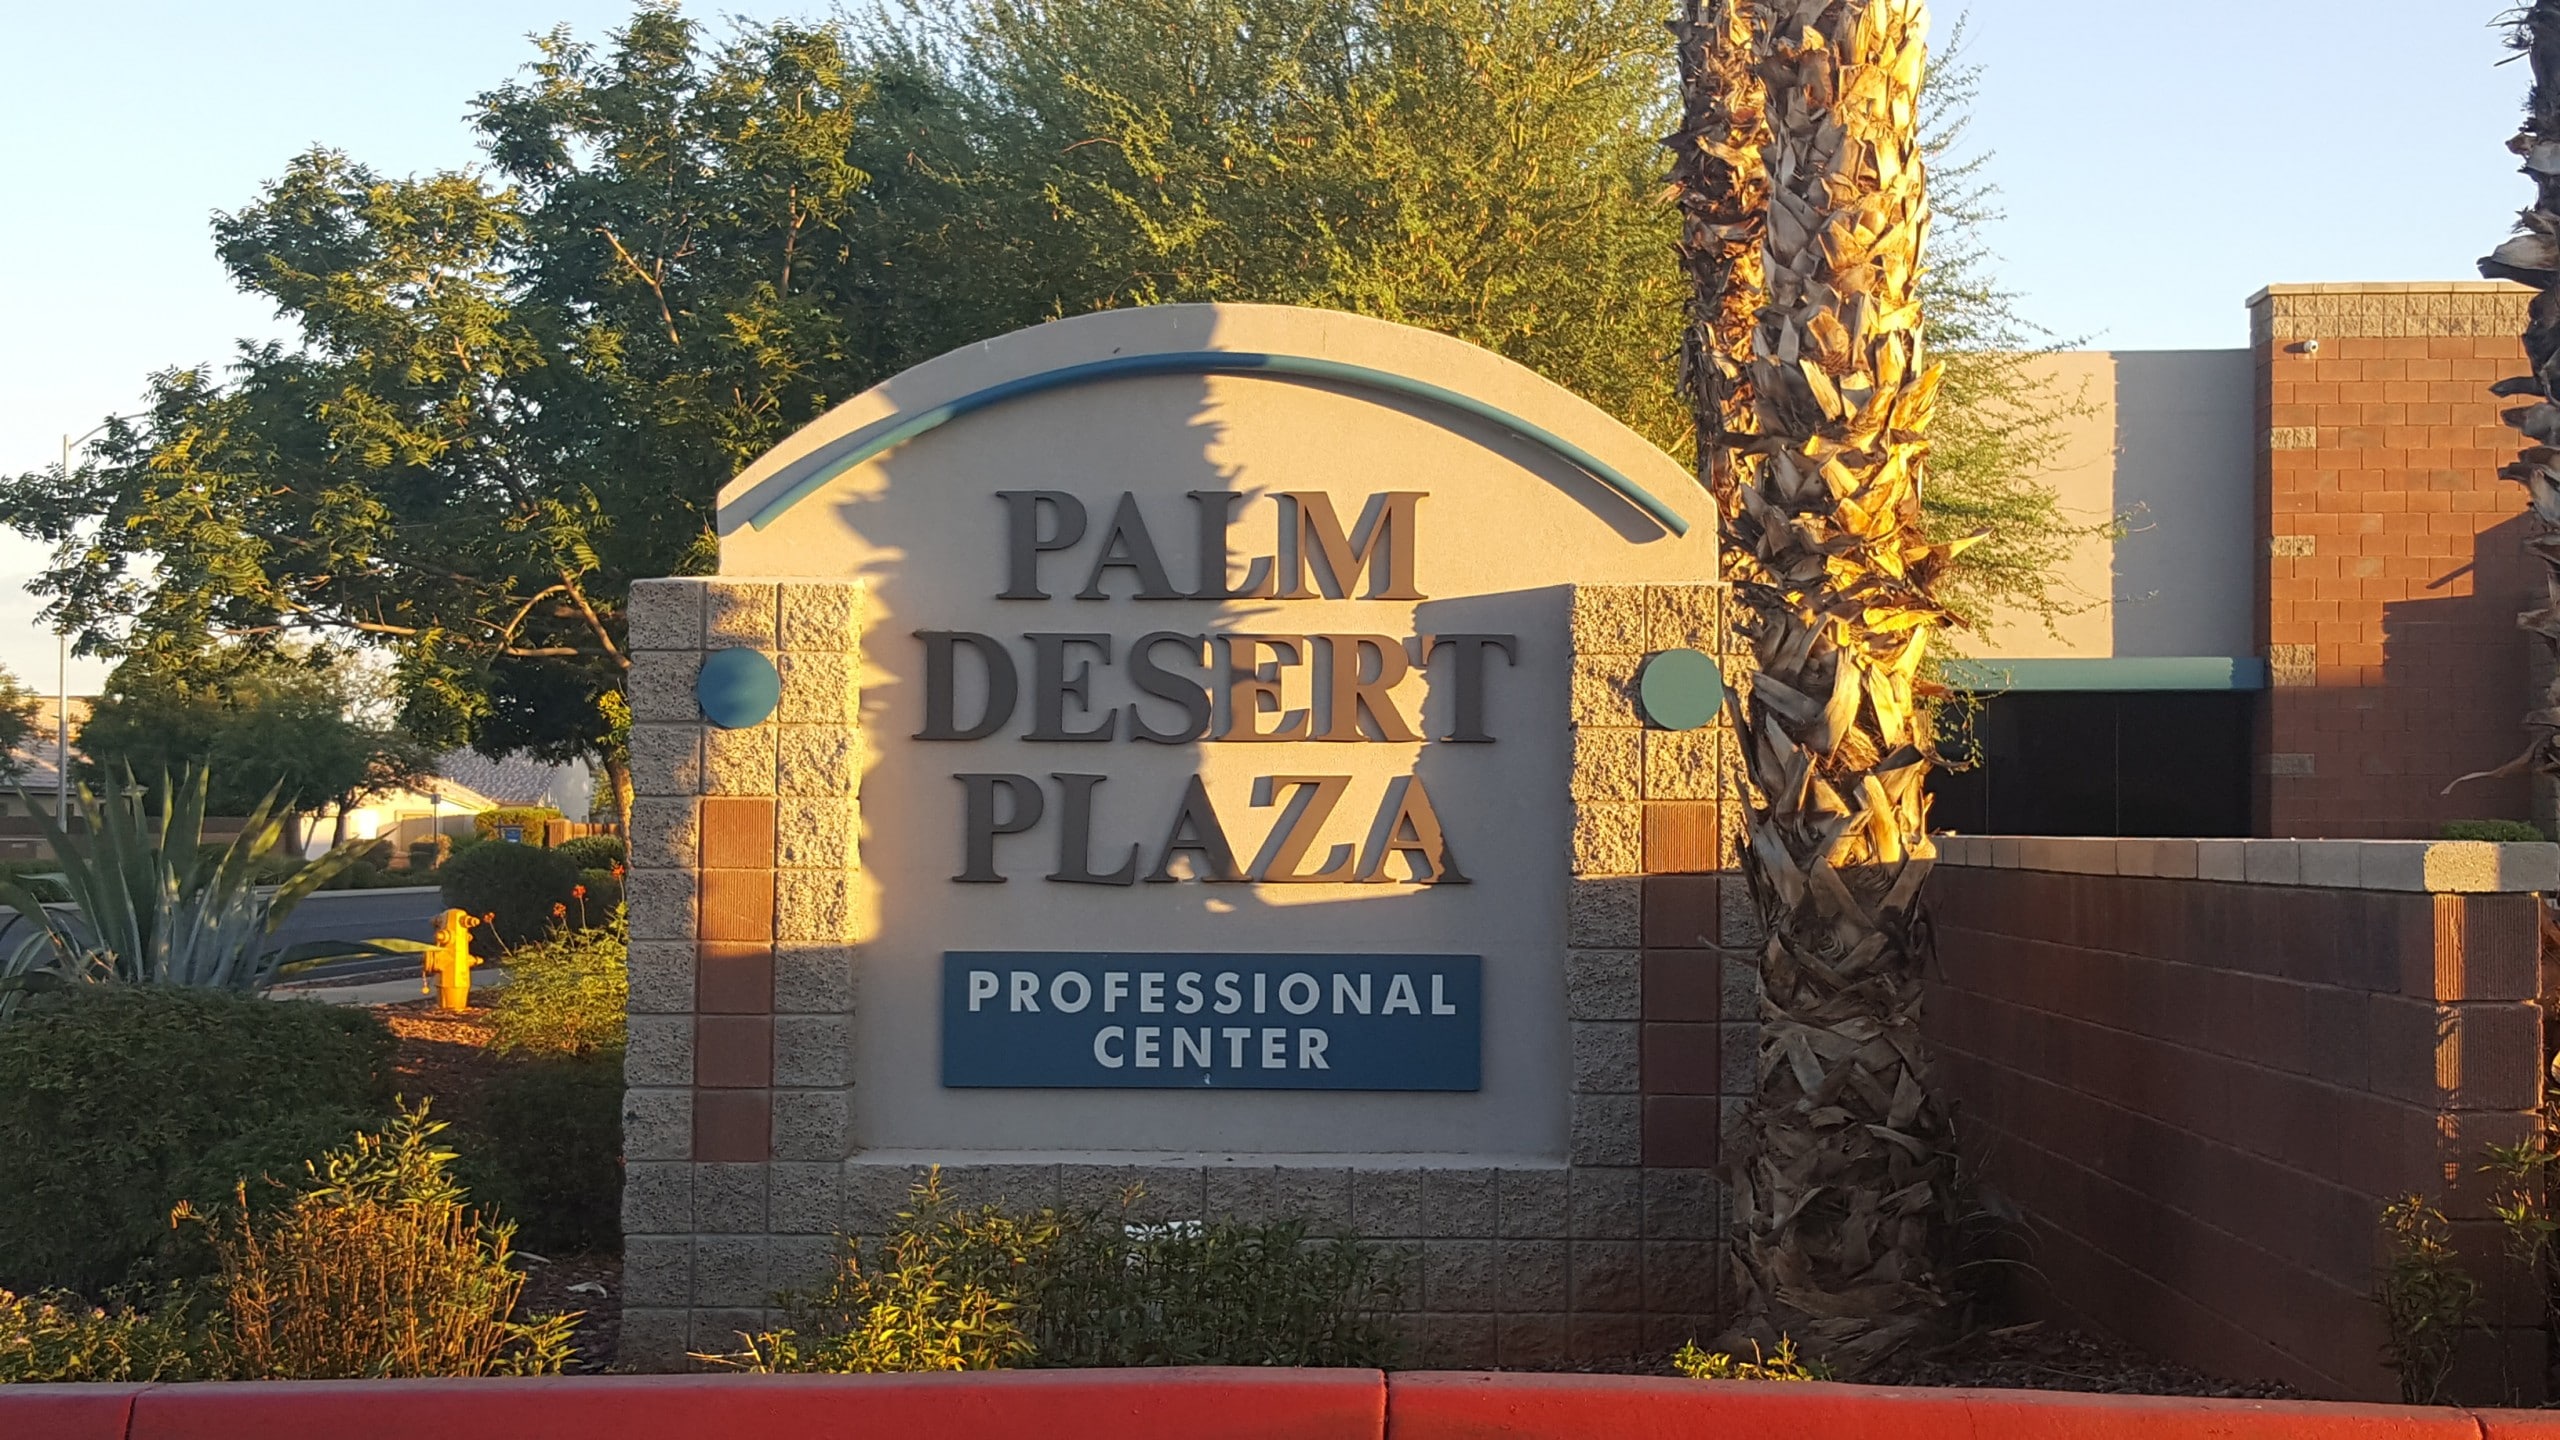 Palm Desert Plaza Professional Center